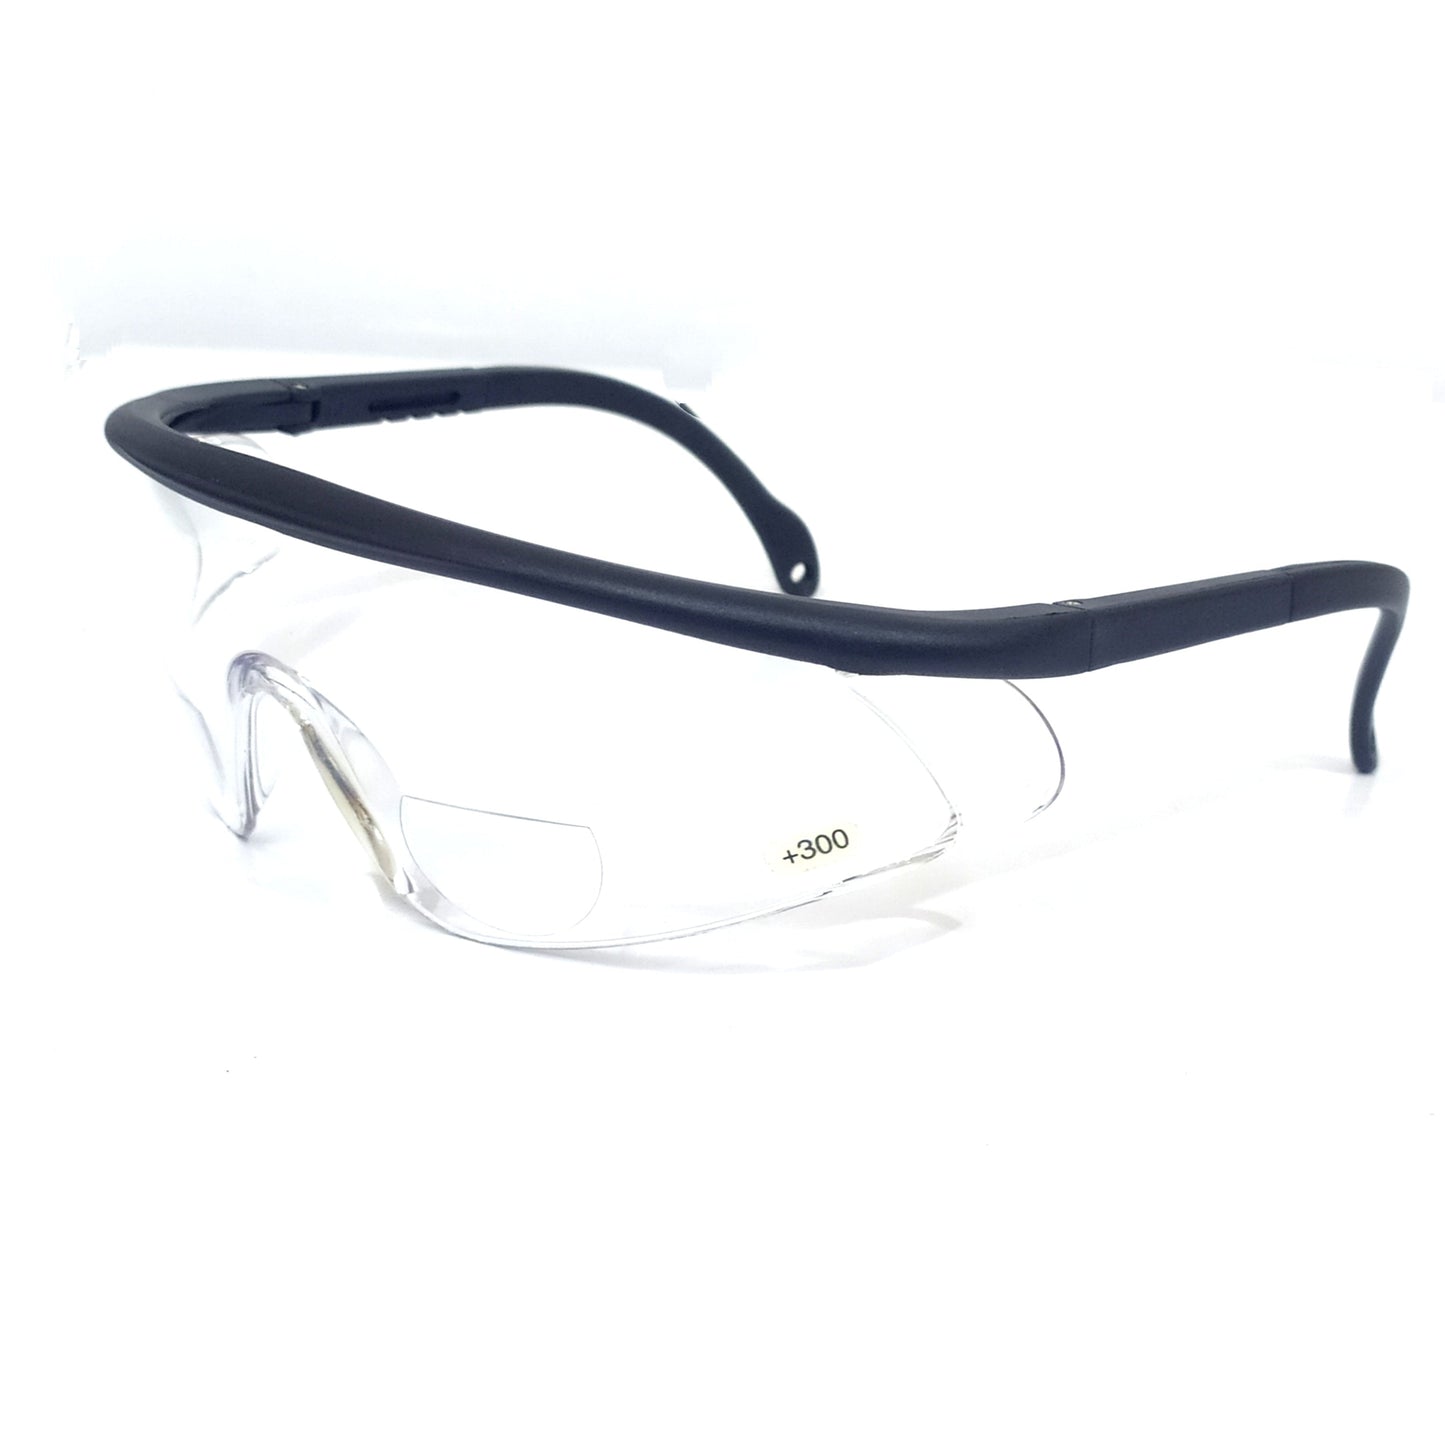 Bifocal Safety Glasses Clear +2.50 Bifocal Lens with Black Frame